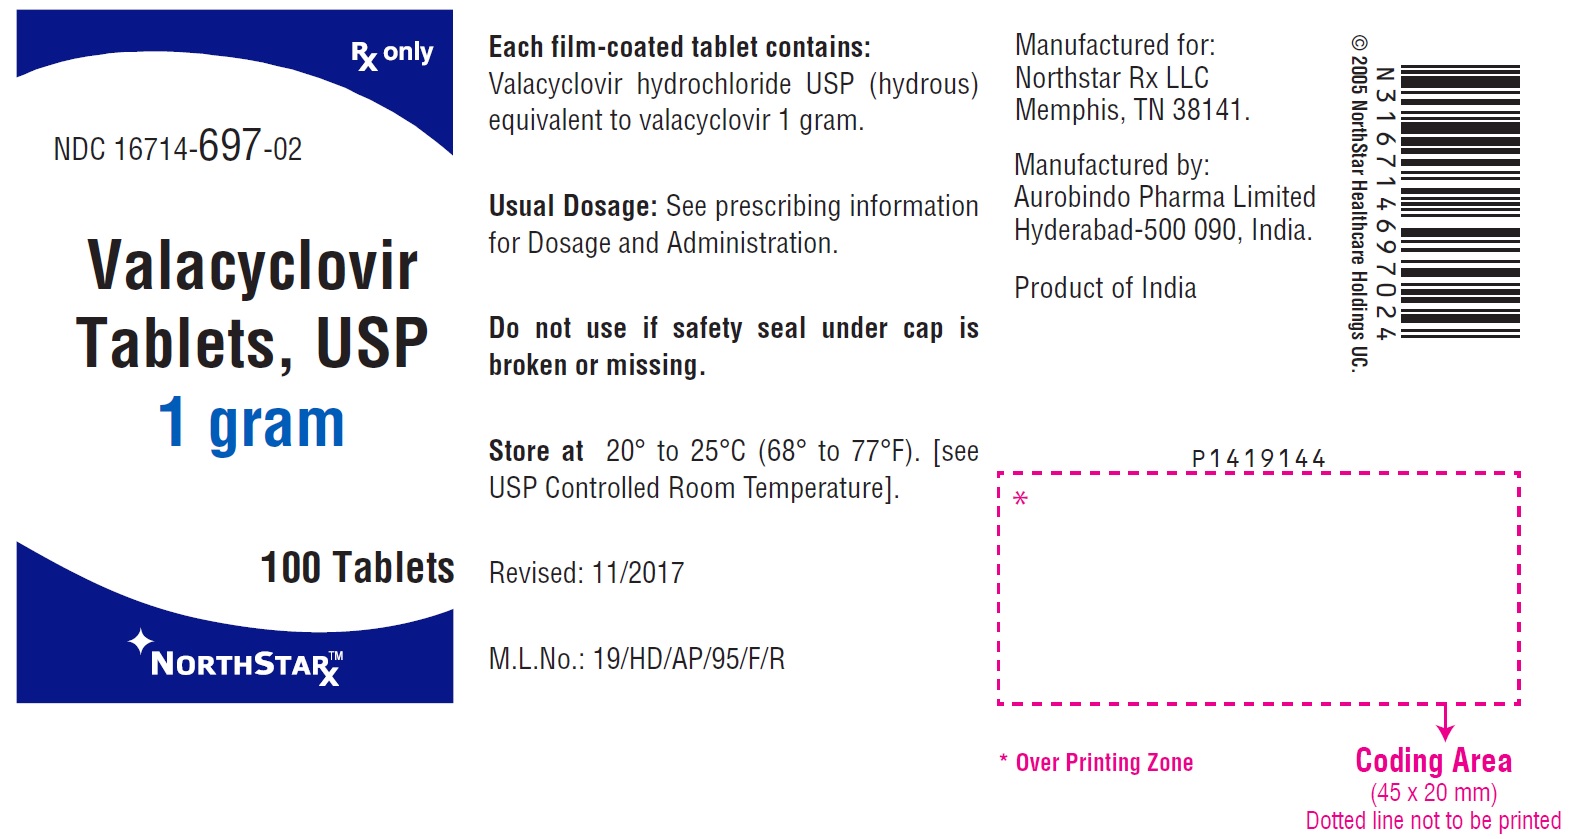 PACKAGE LABEL-PRINCIPAL DISPLAY PANEL - 1 g (100 Tablet Bottle)